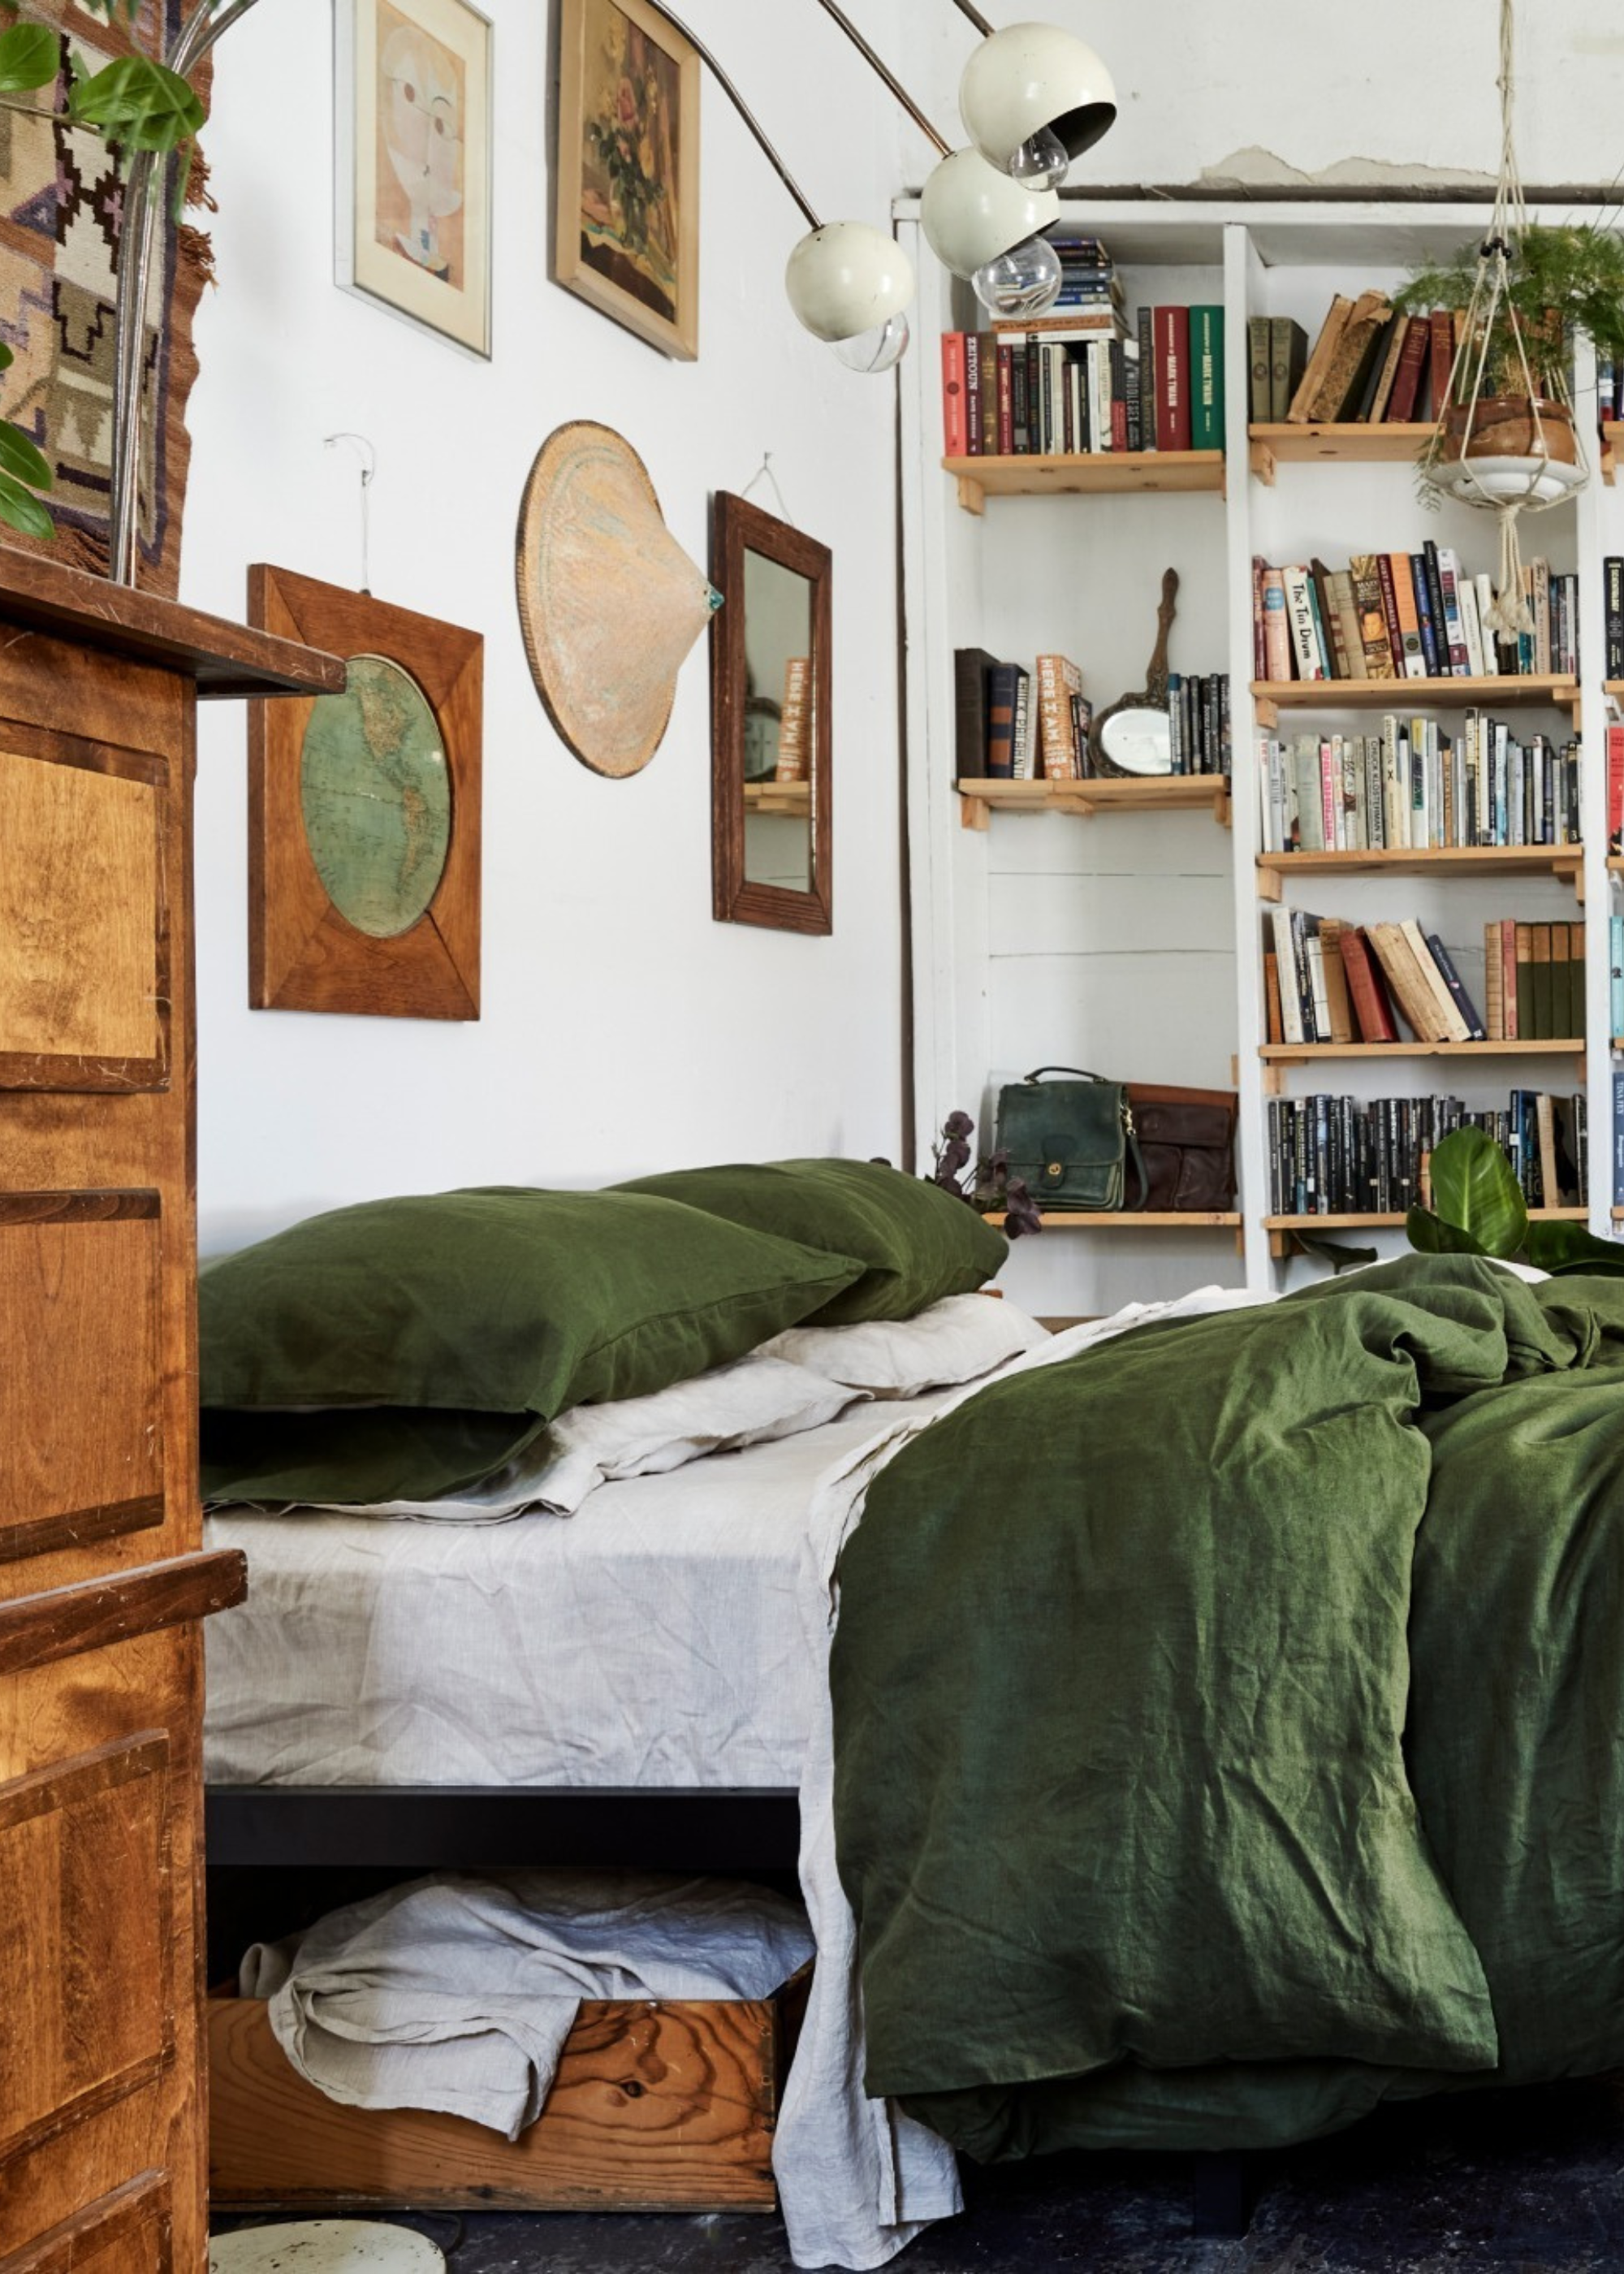 Dorm Room RecipesEasy, Healthy and Delicious! — The Green Robe